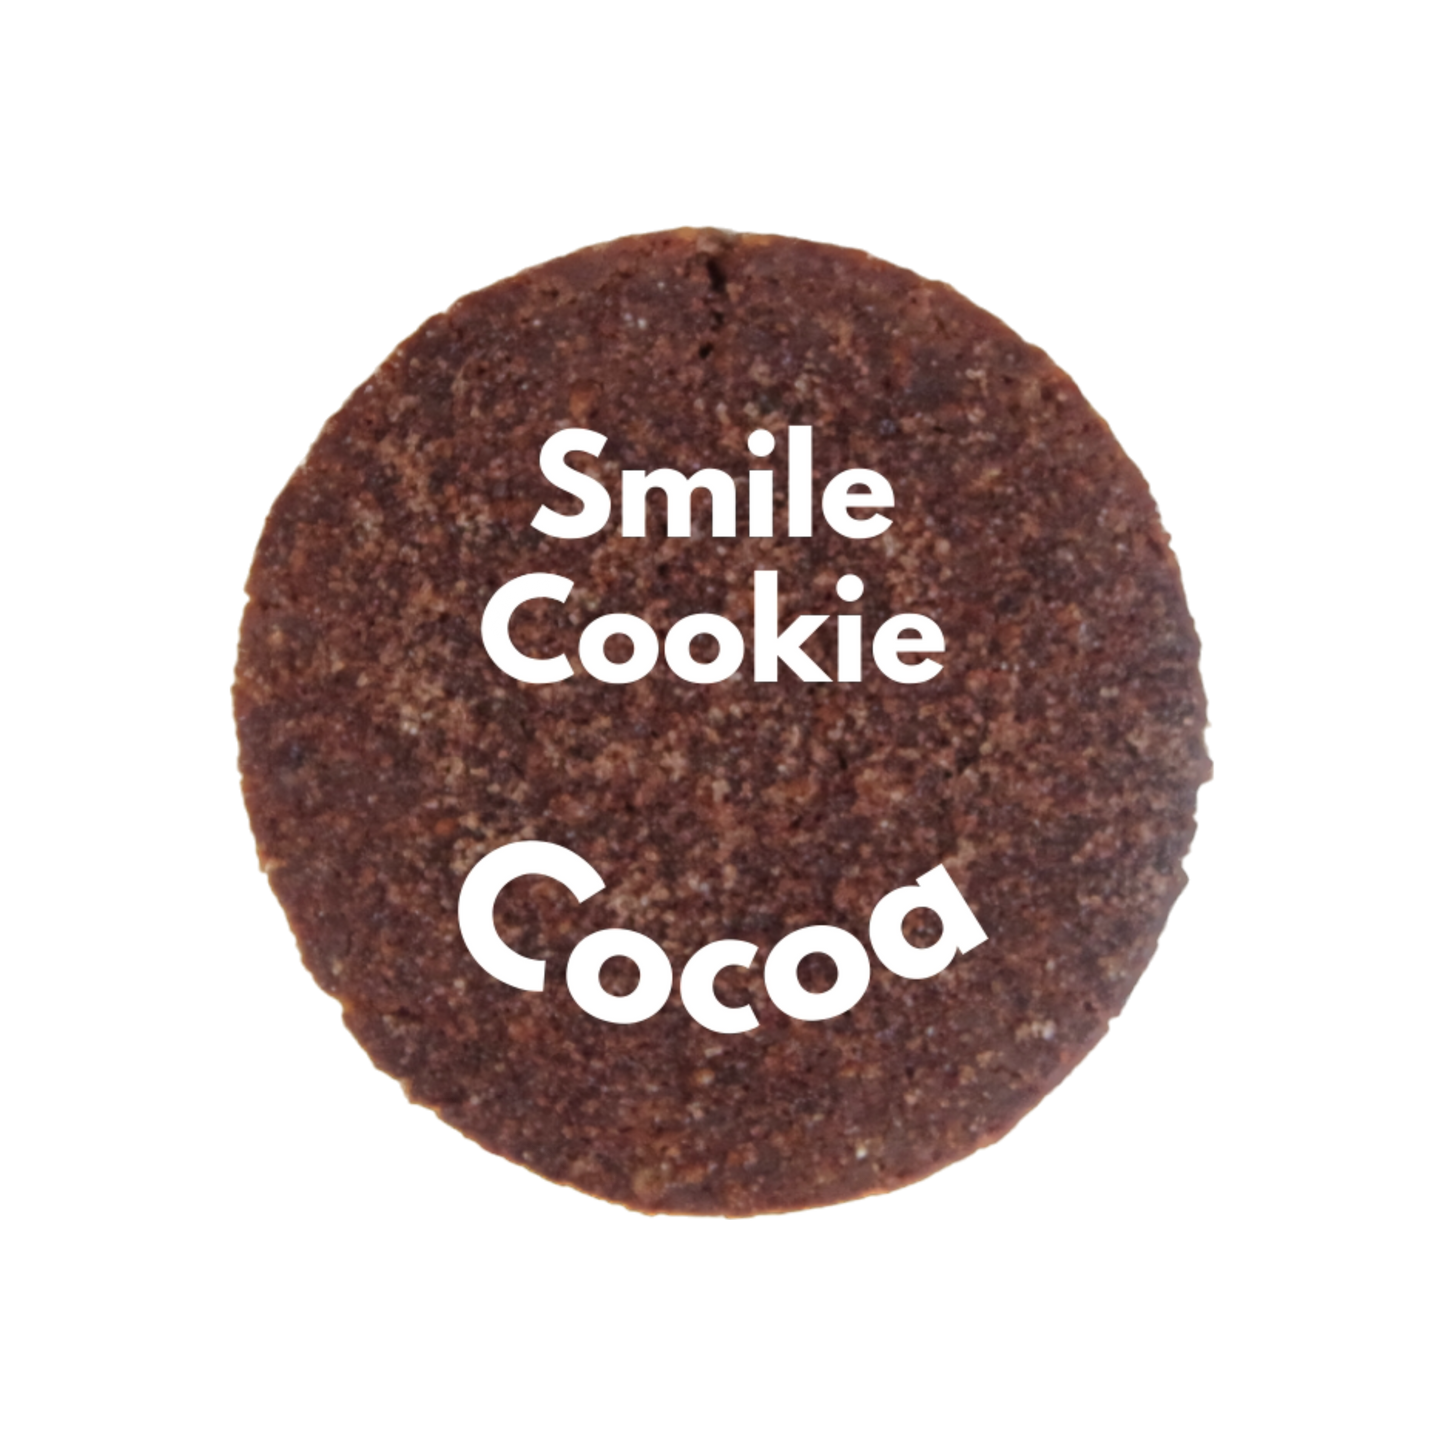 Obugo Smile Cookie Cocoa (Vegan / Gluten Free)